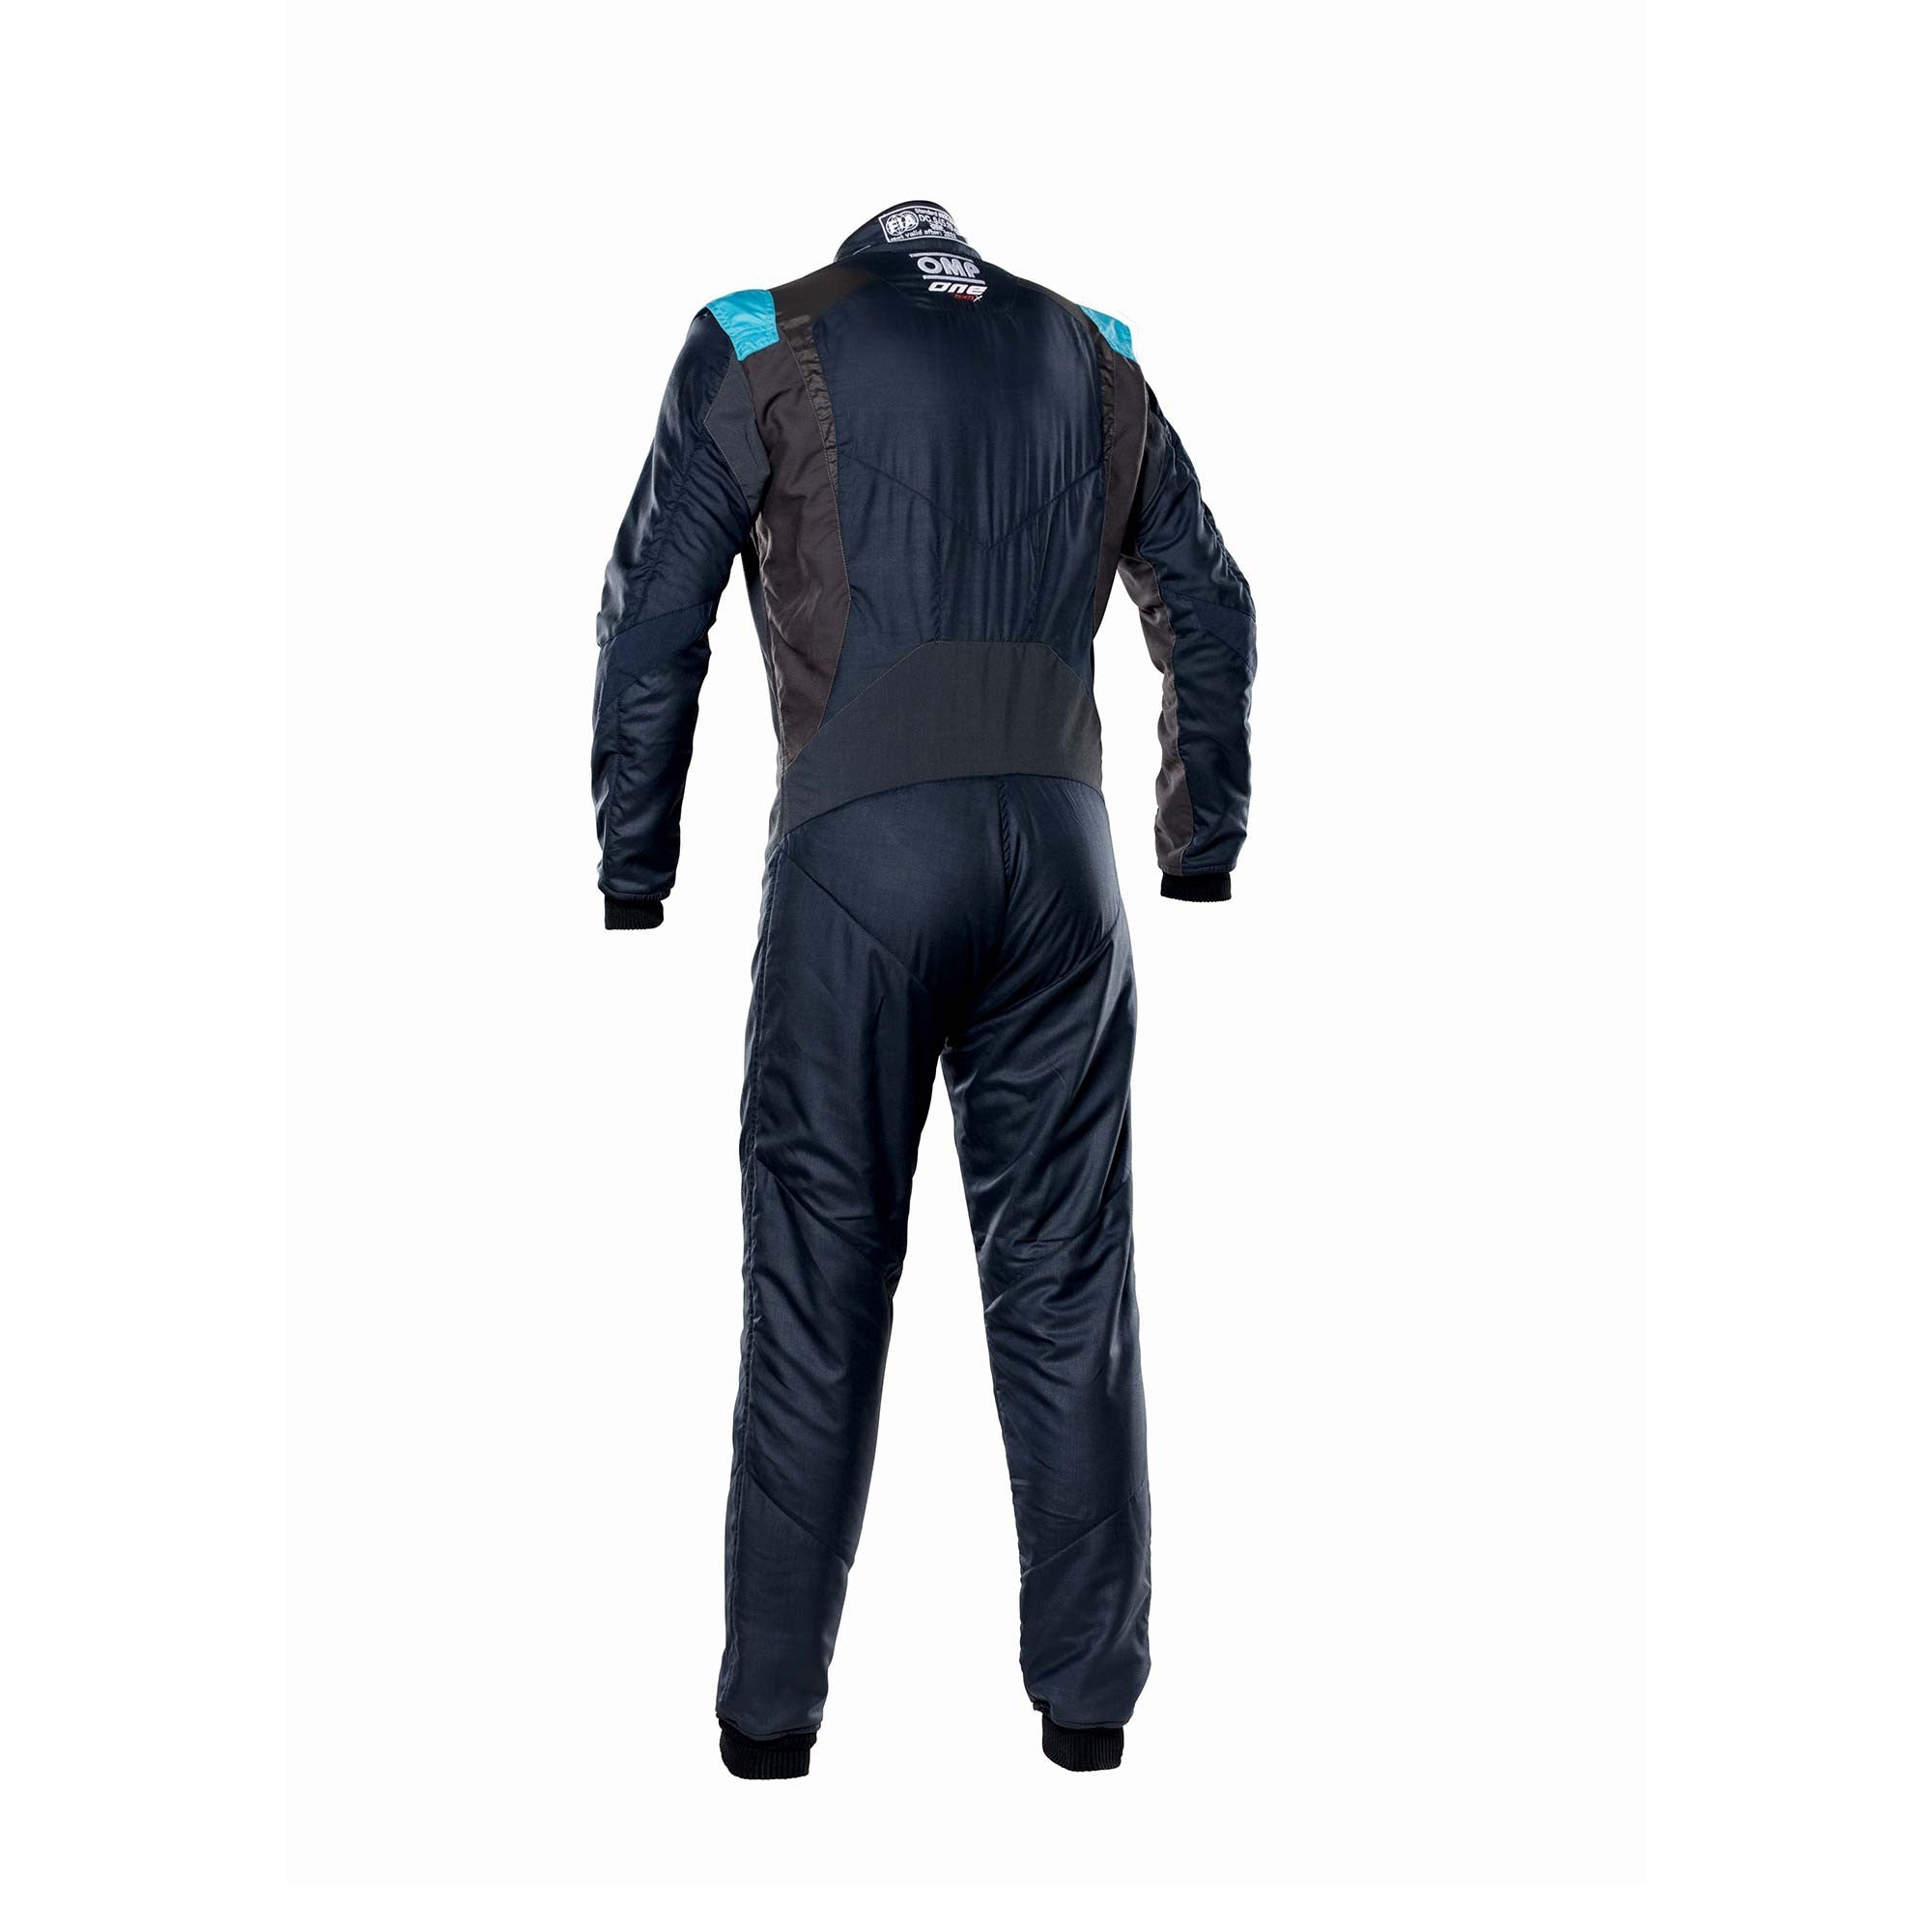 OMP IA0-1861-A01-246-58 Racing suit ONE EVO X, FIA 8856-2018, navy blue/gray/cyan, size 58 Photo-1 